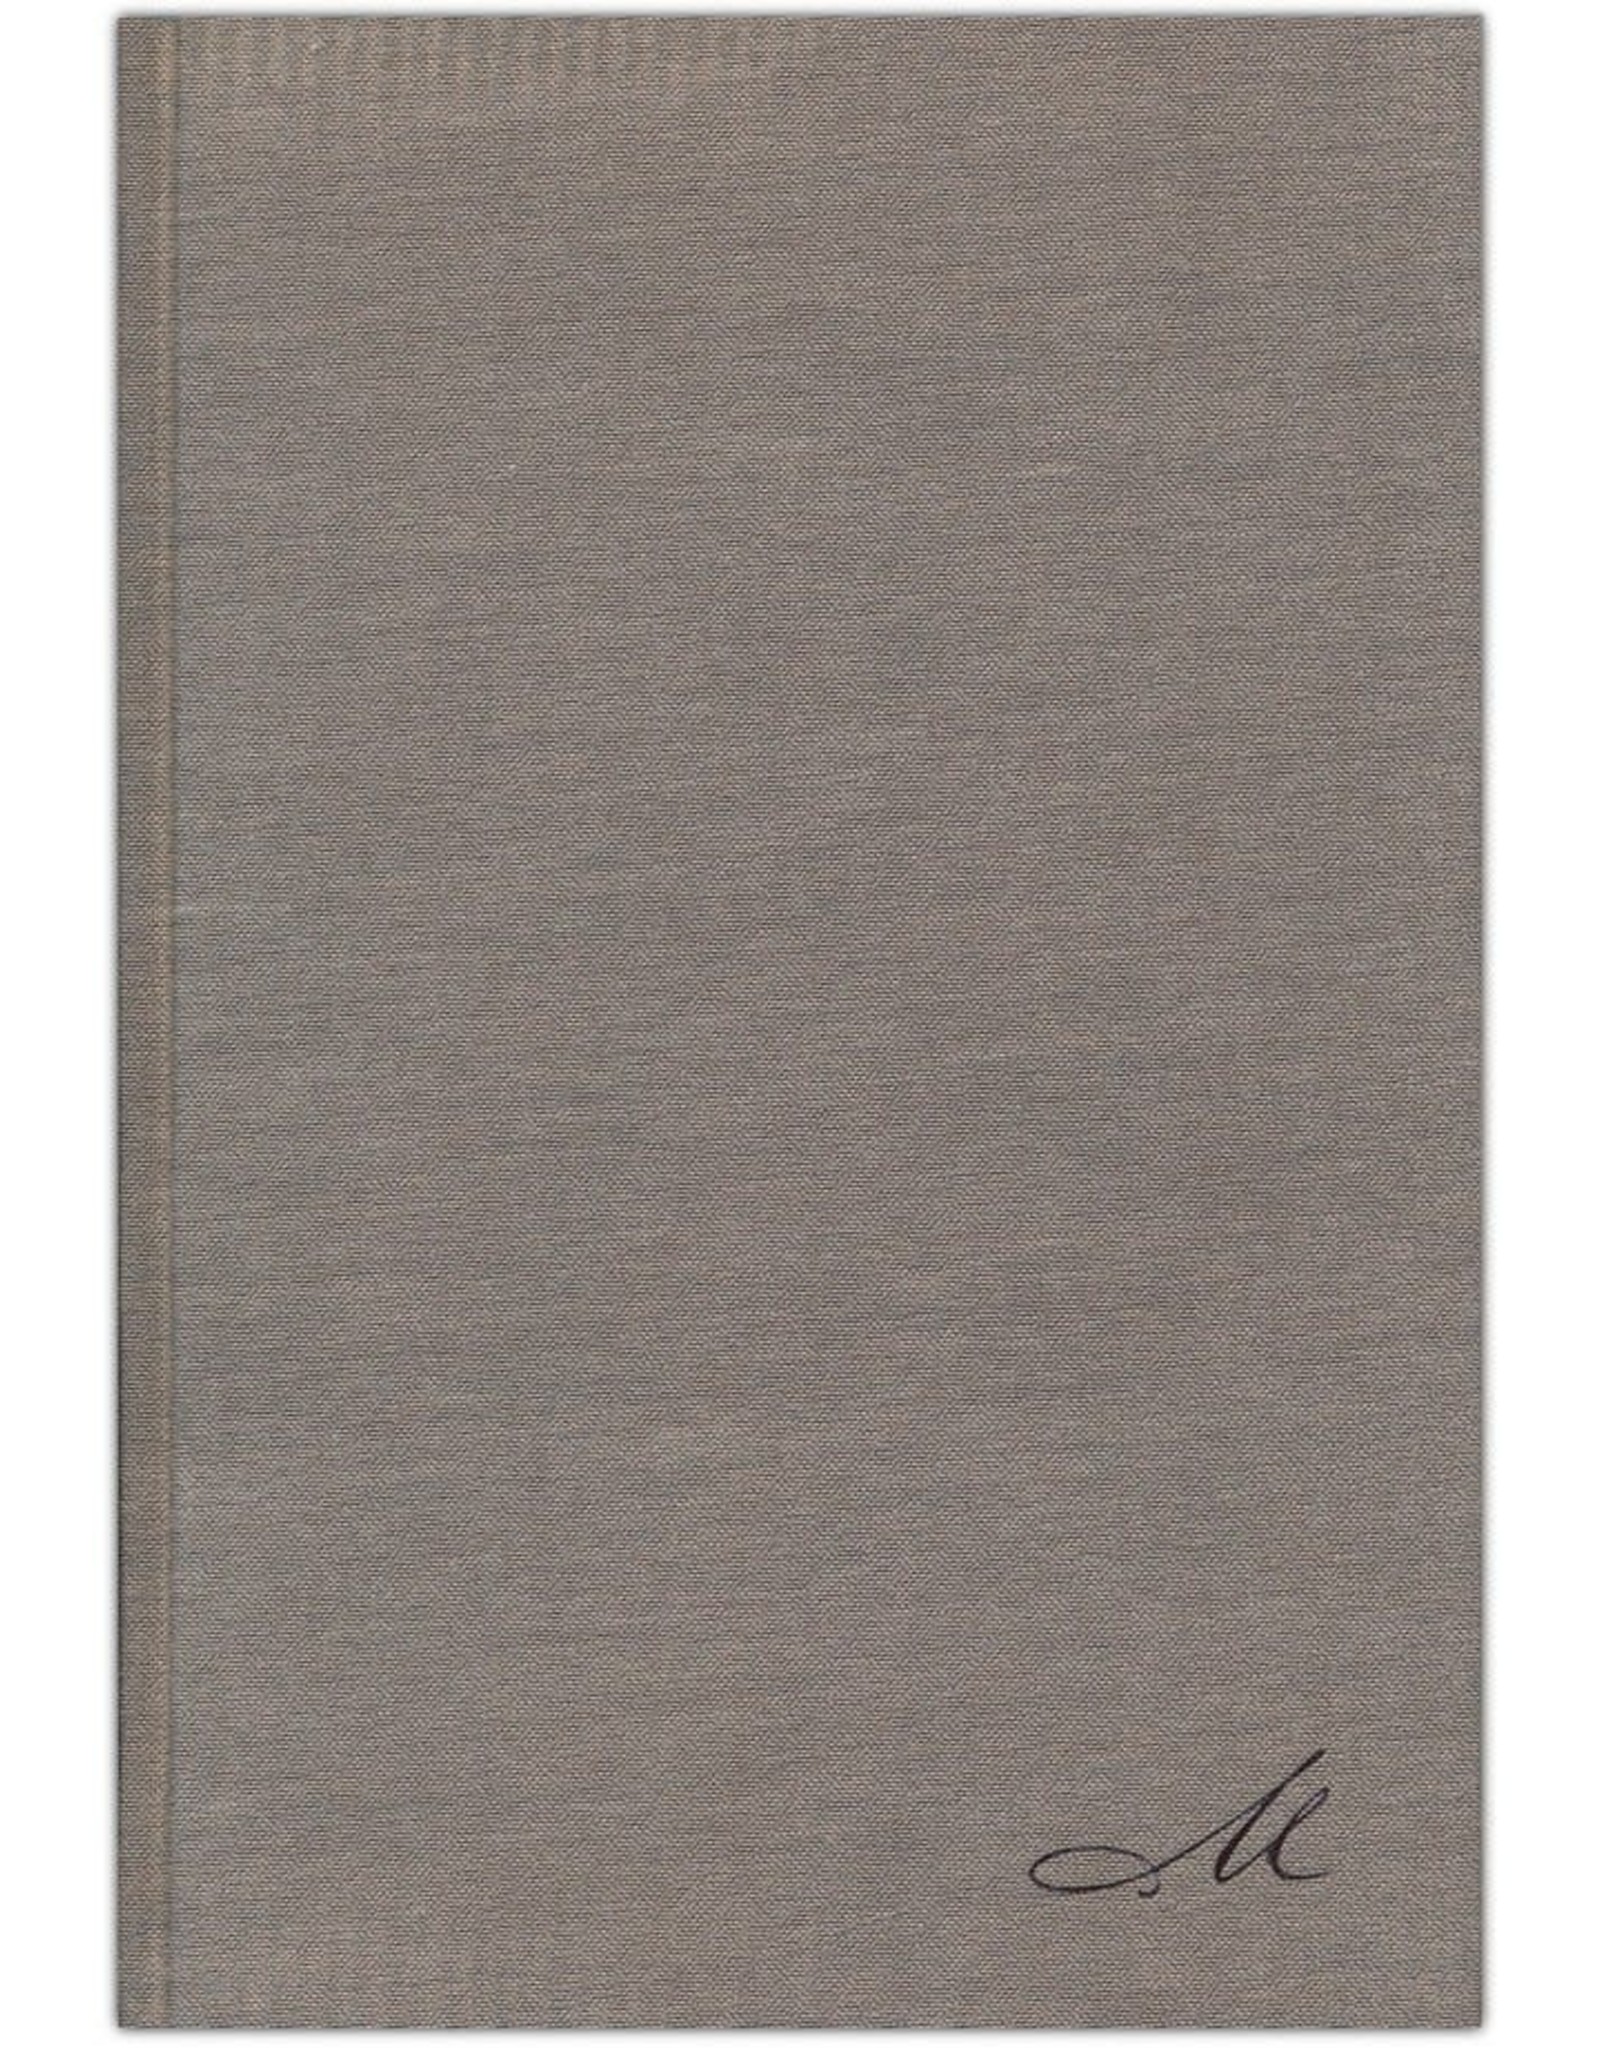 Vida SPAN - NBLA Biblia de Estudio MacArthur, Tapa Dura/Tela, Gris (MSB 2nd Edition, Hardcover, Gray)